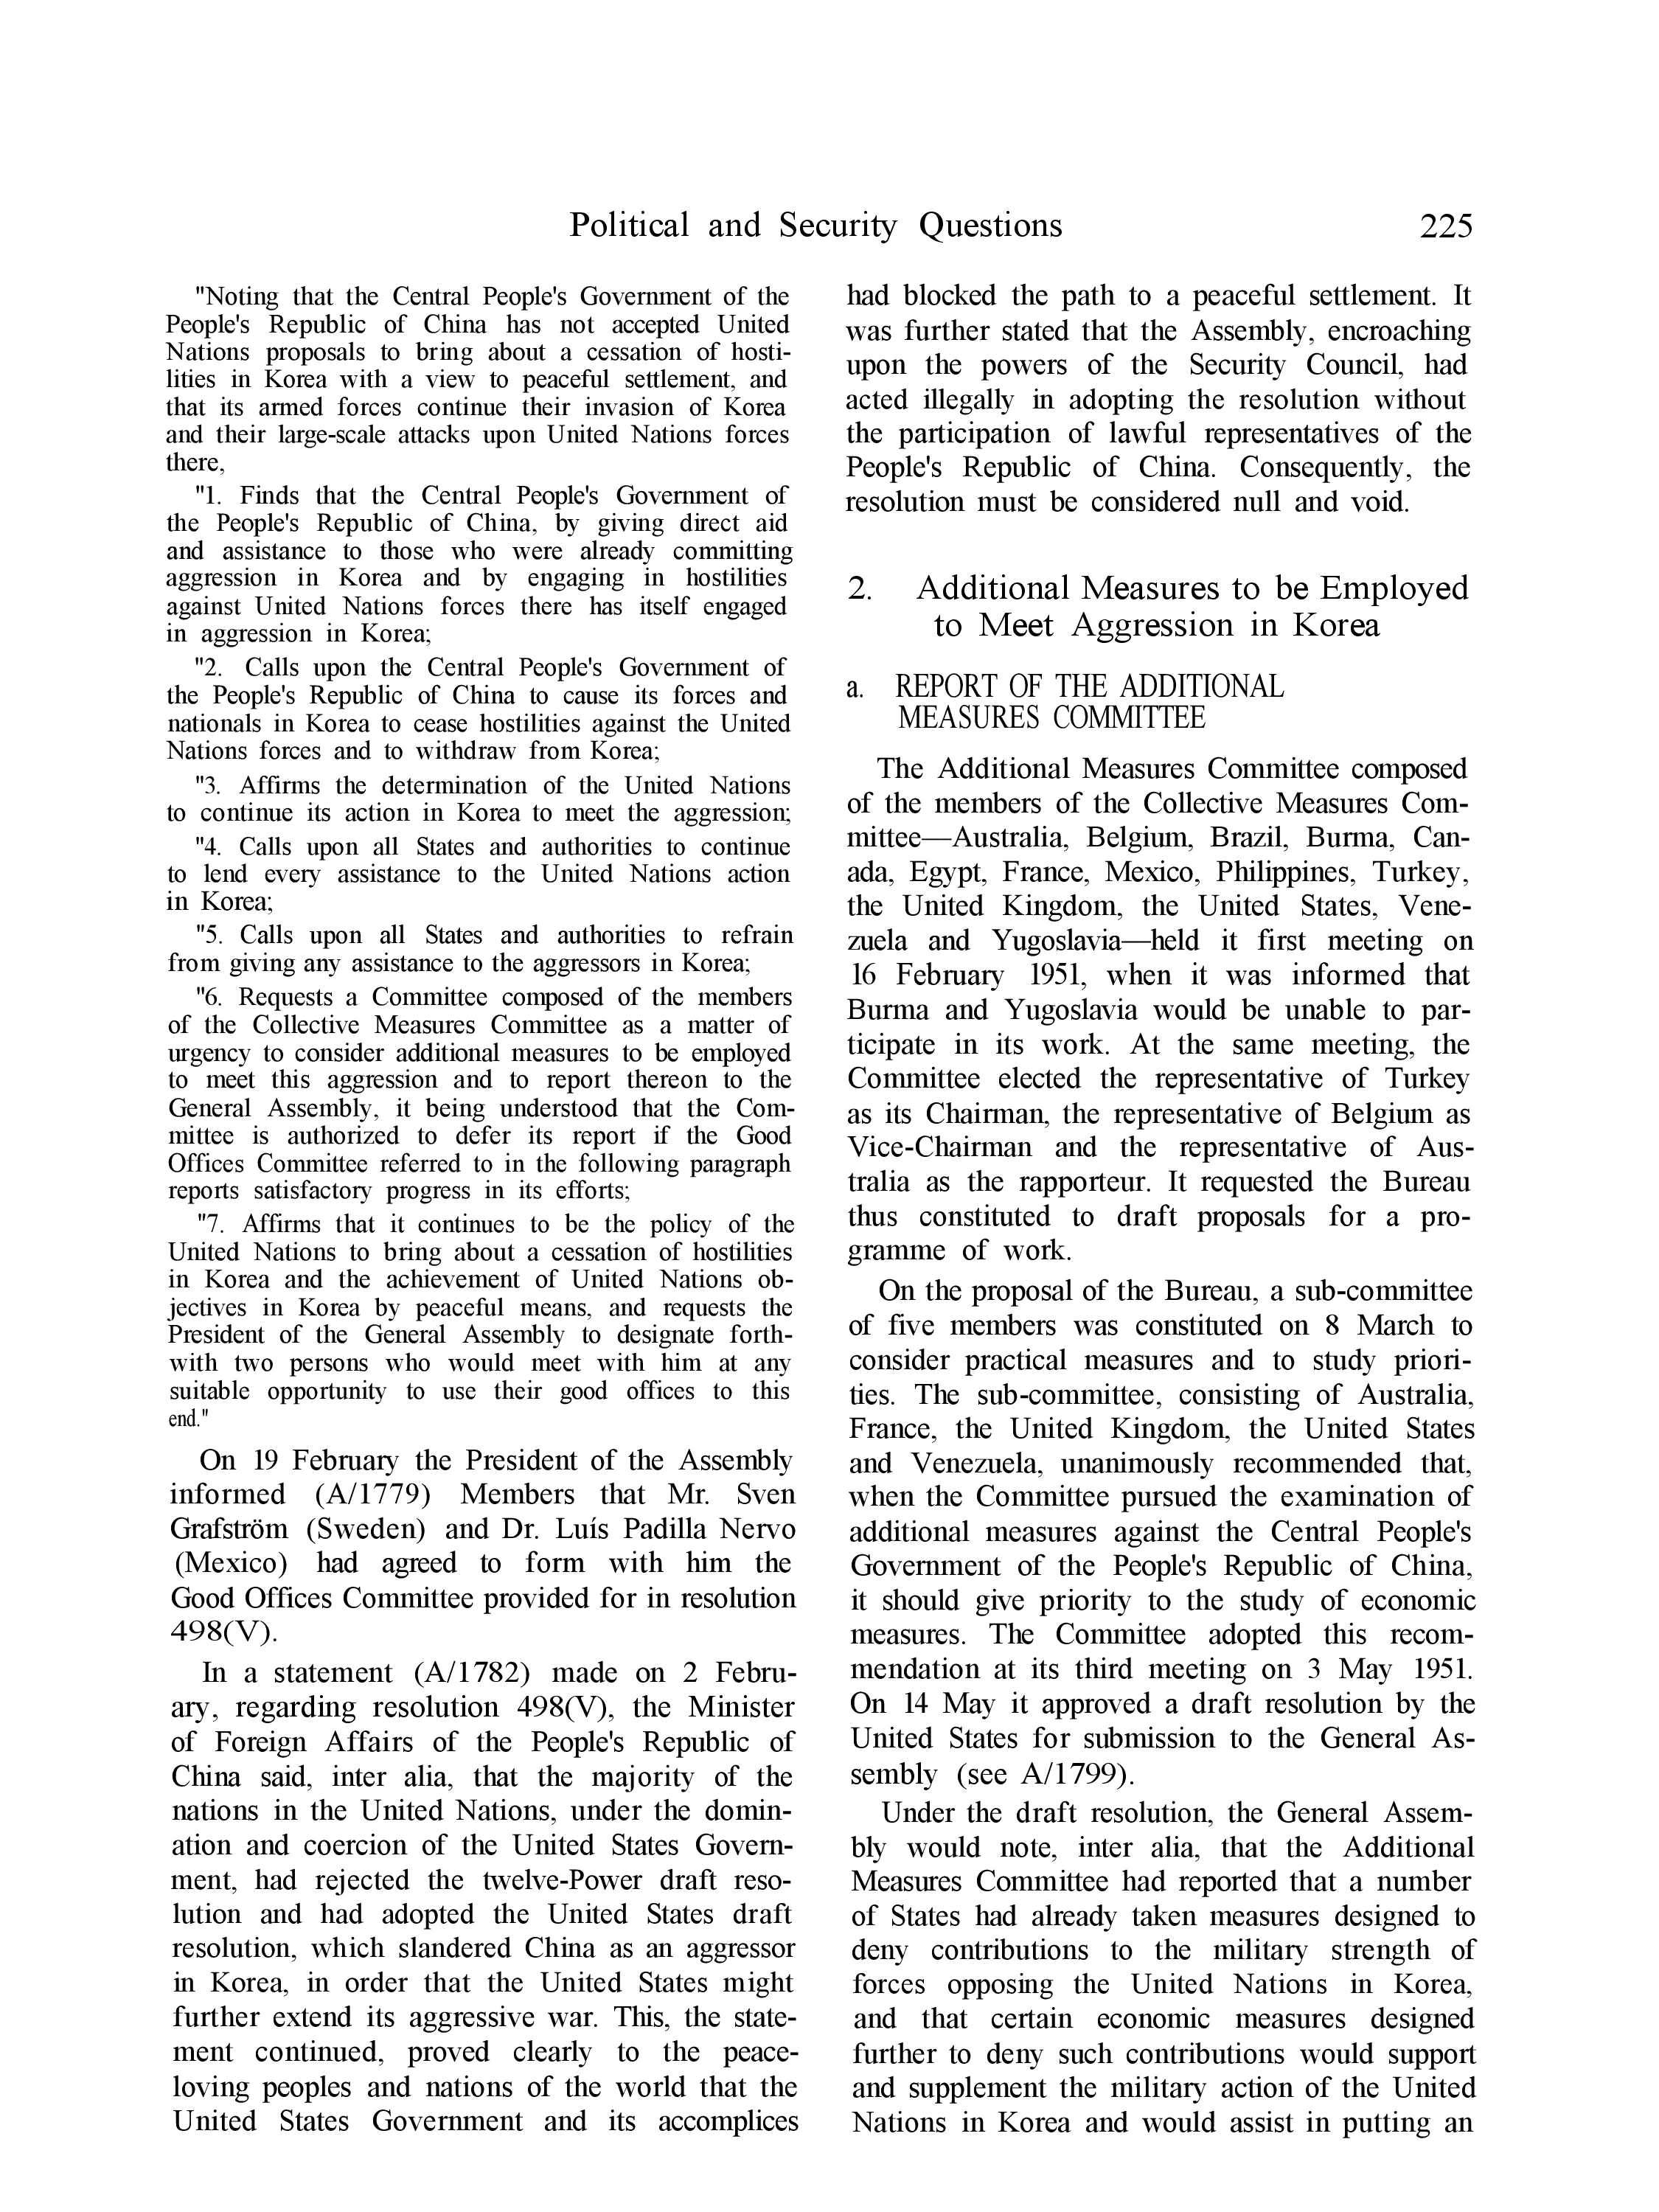 YUN Volume_Page 1951_235